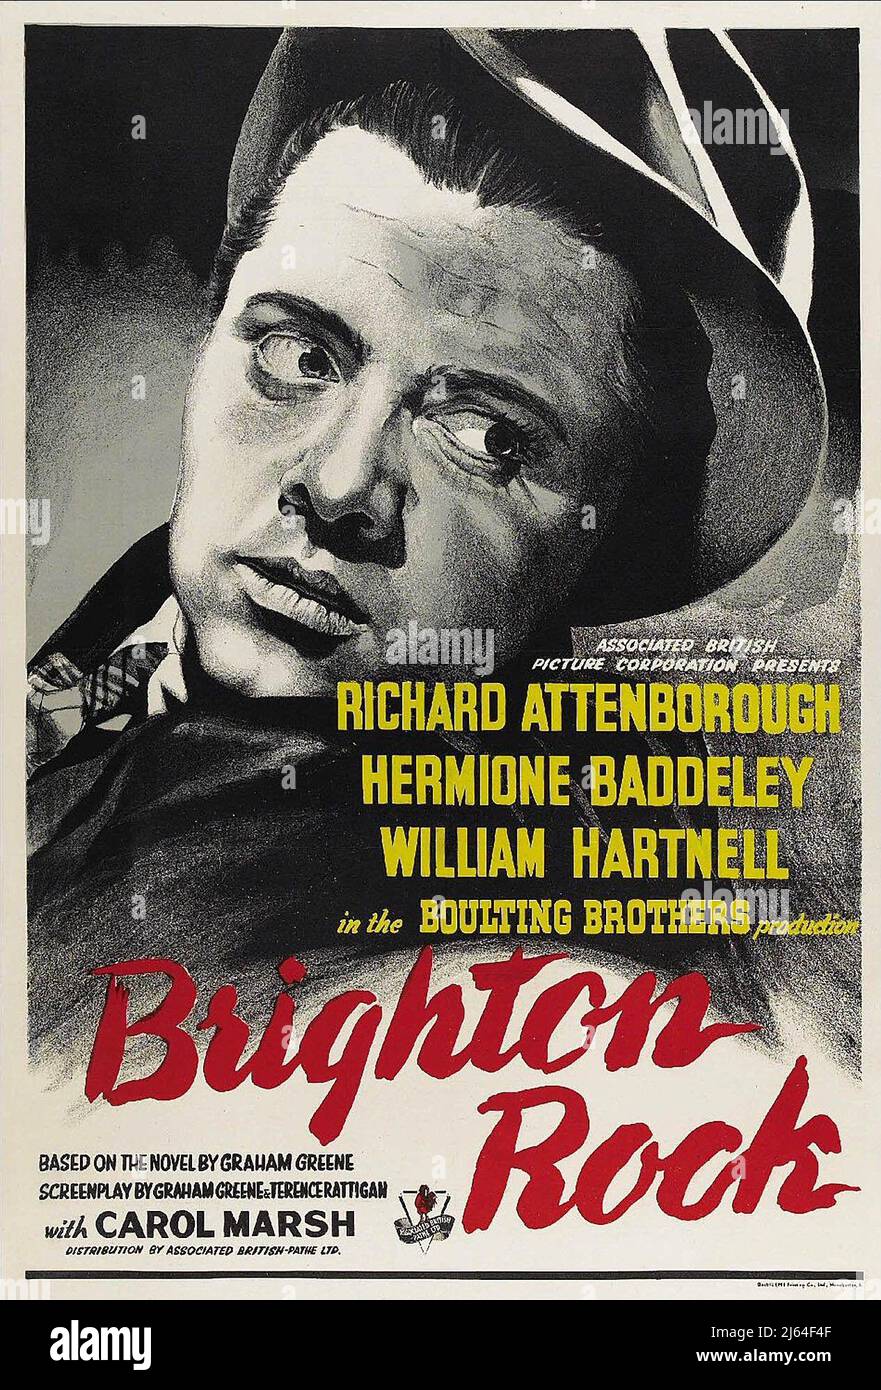 RICHARD ATTENBOROUGH POSTER, BRIGHTON ROCK, 1947 Stock Photo